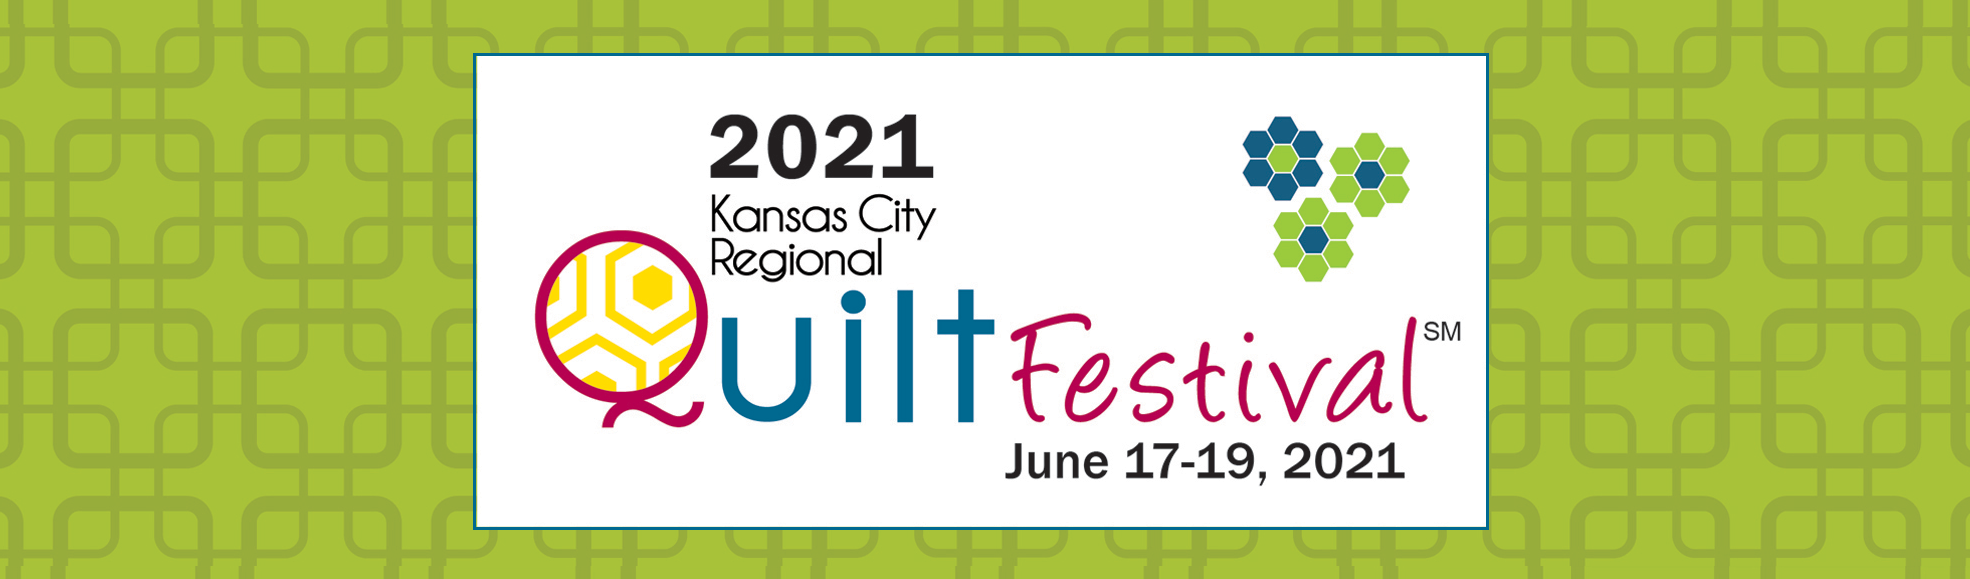 2021 Kansas City Regional Quilt Festival